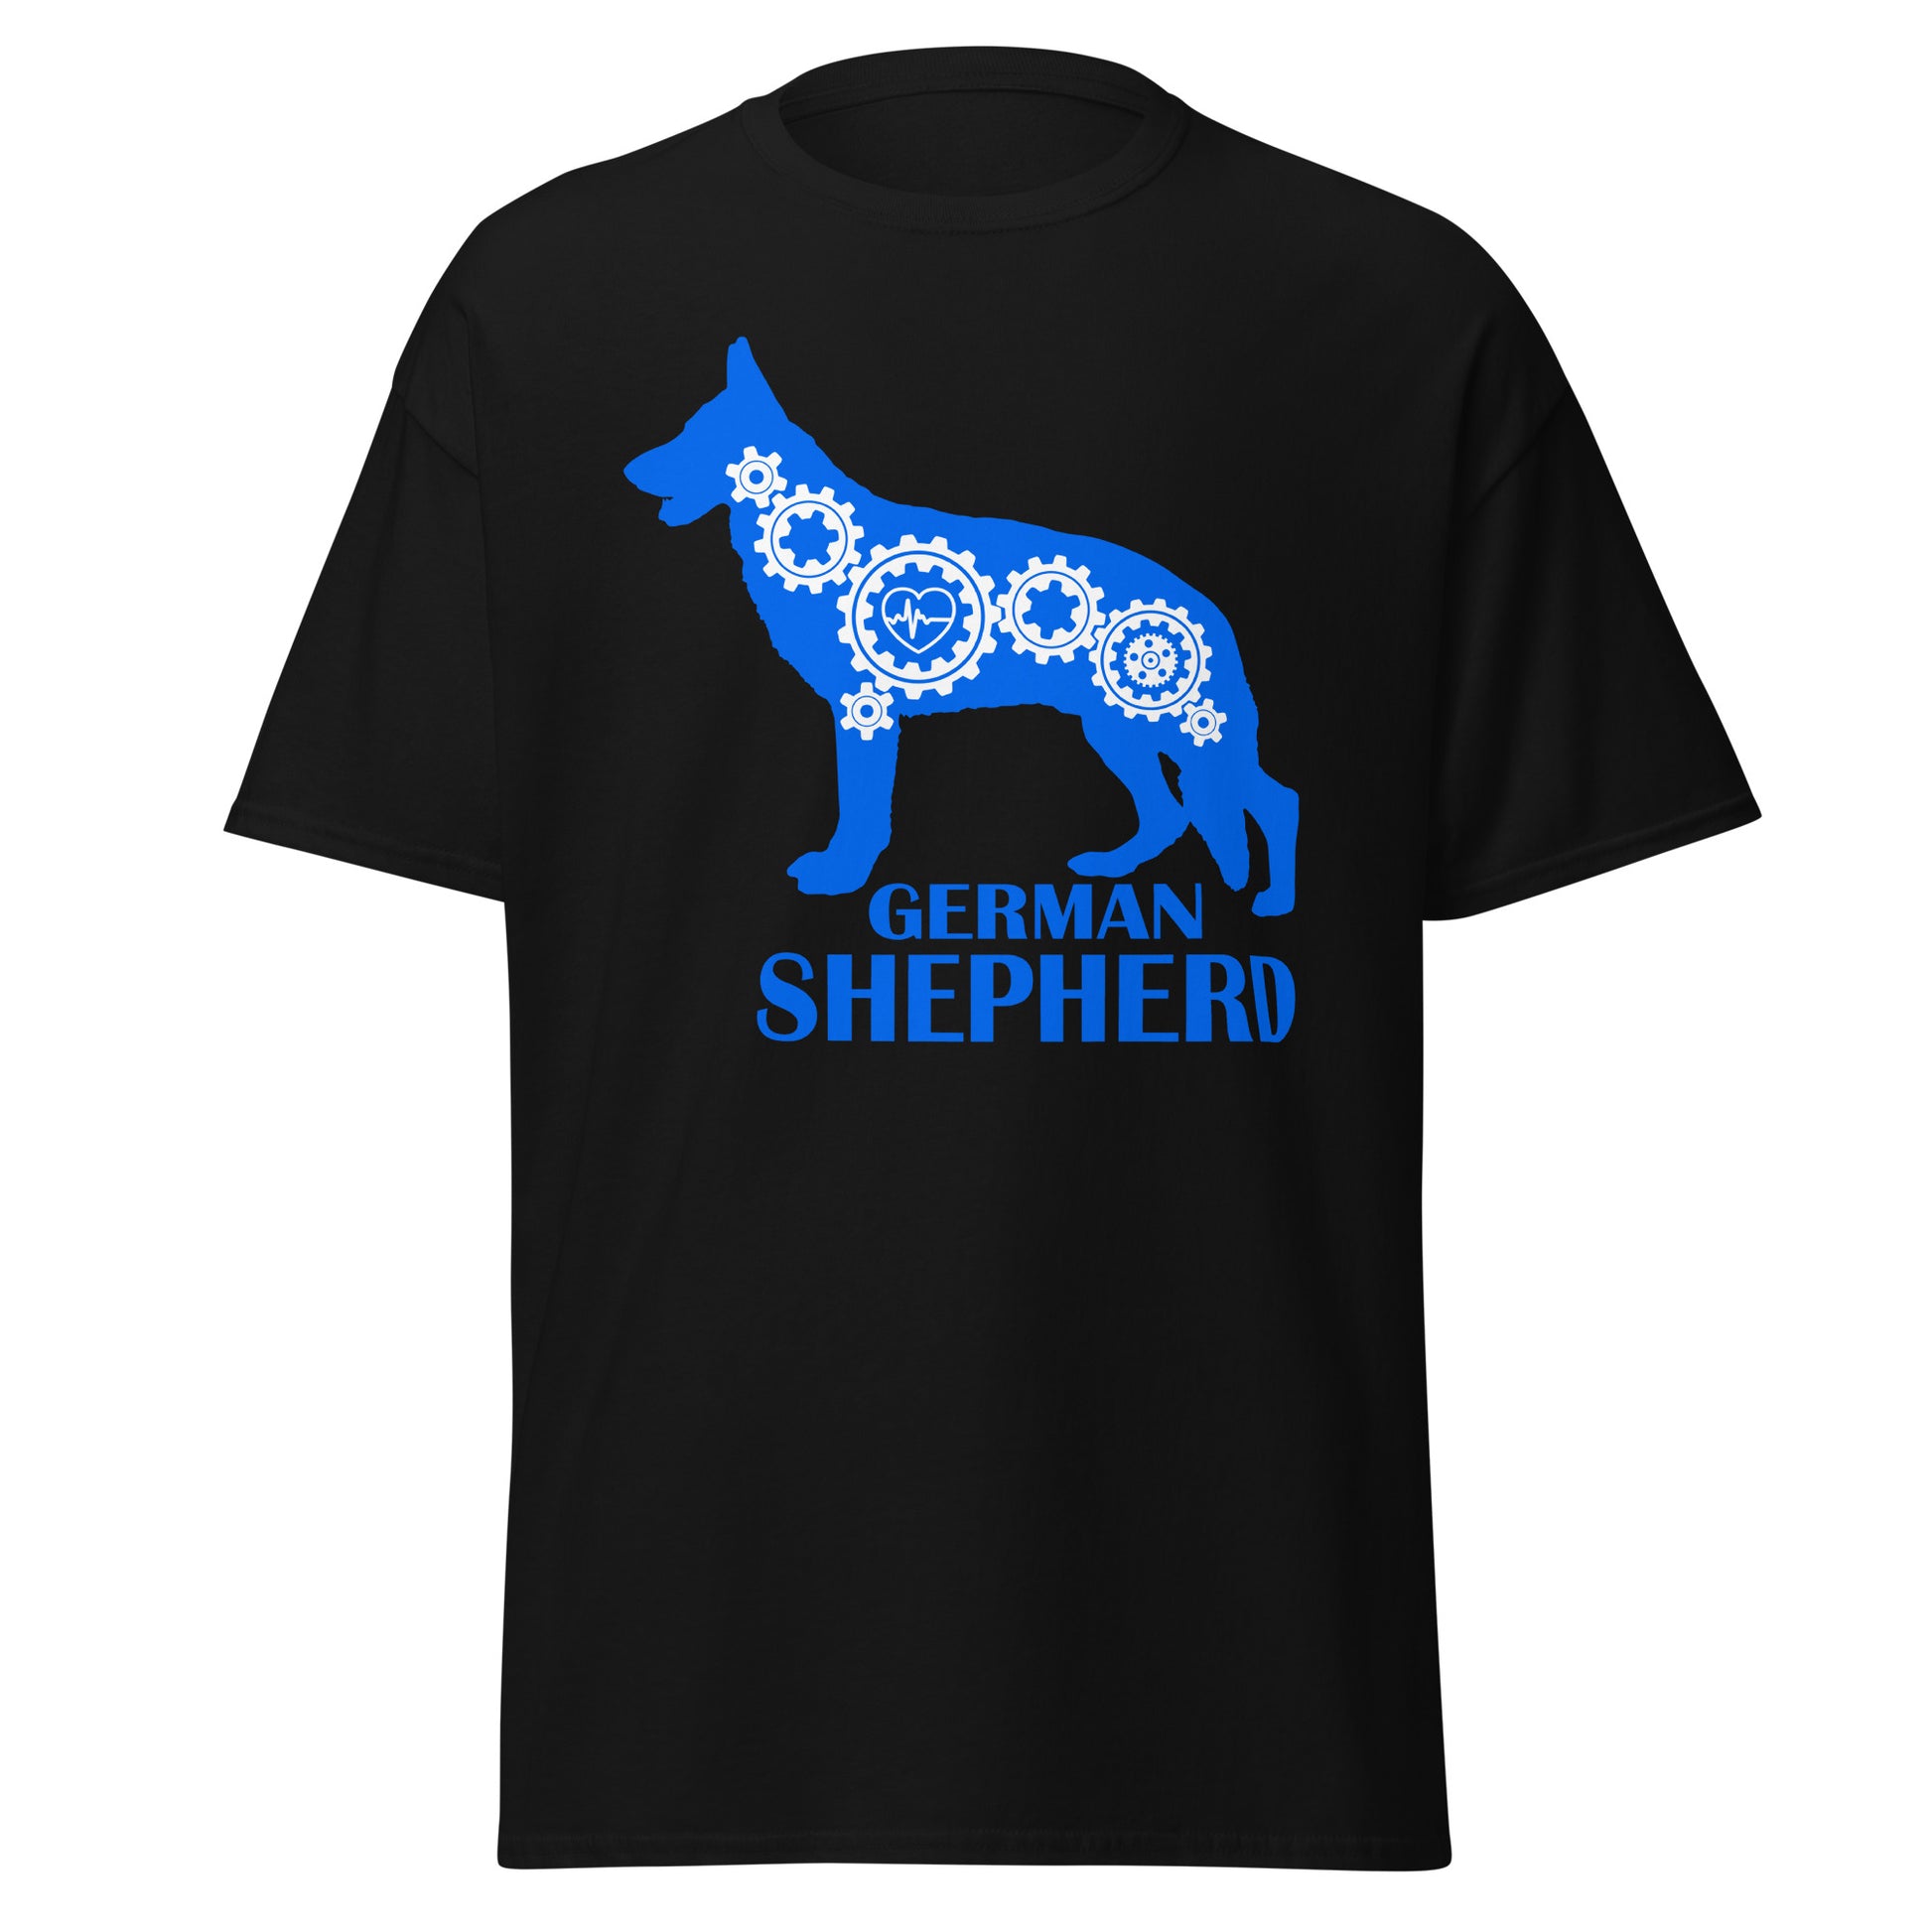 German Shepherd Bionic men’s black t-shirt by Dog Artistry.